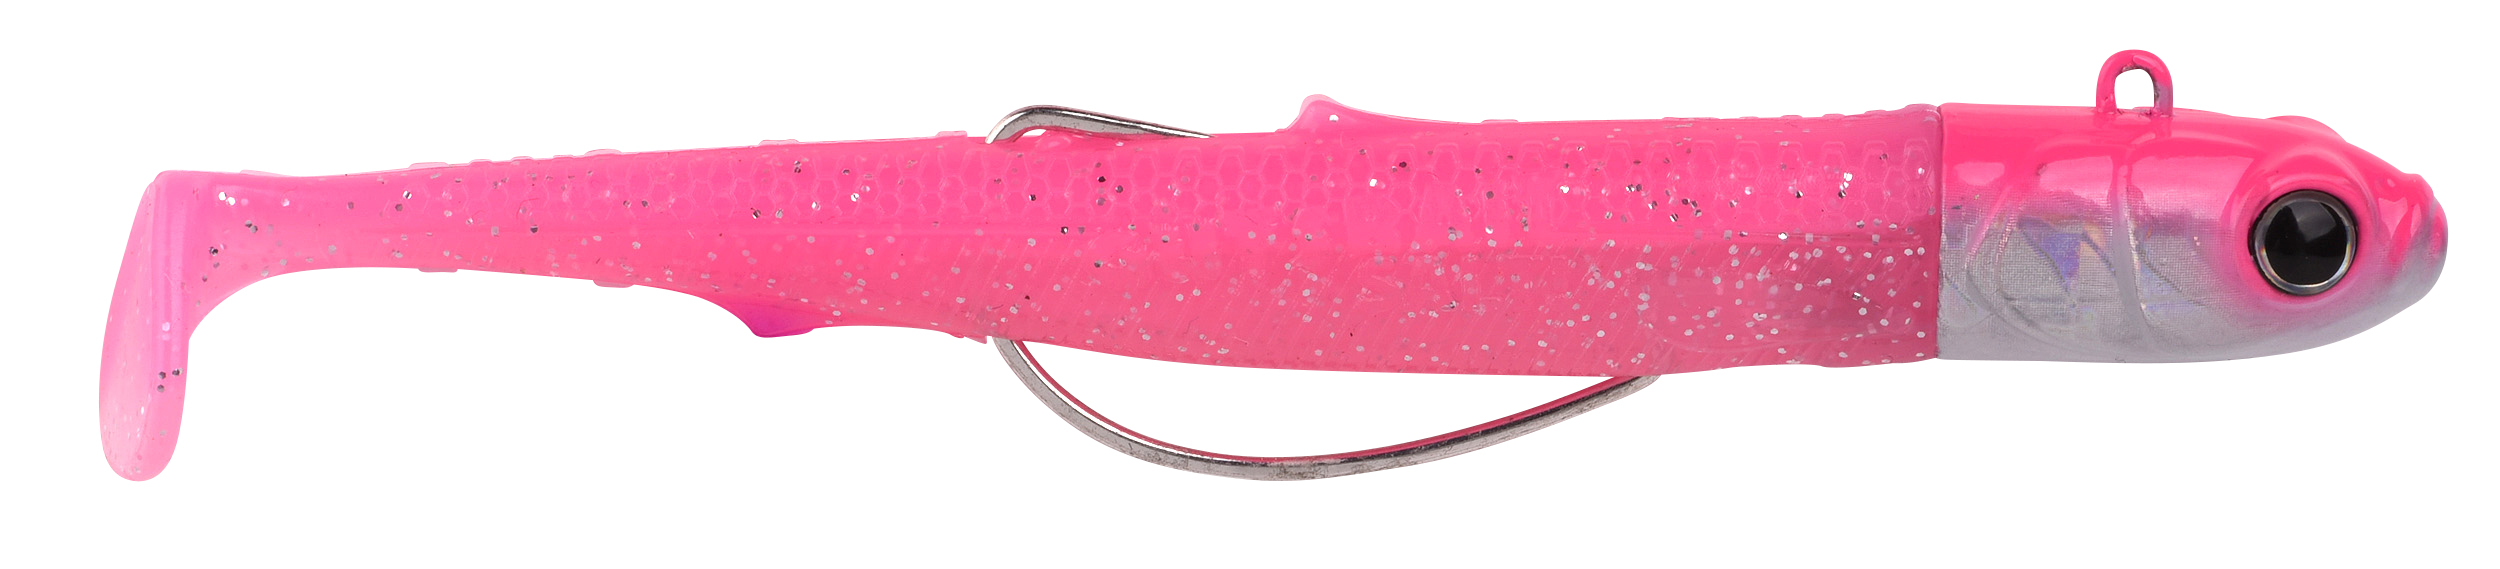 Spro Gutsbait Salt Softbait Pesci Marini 8cm (7g) - Pink Minnow